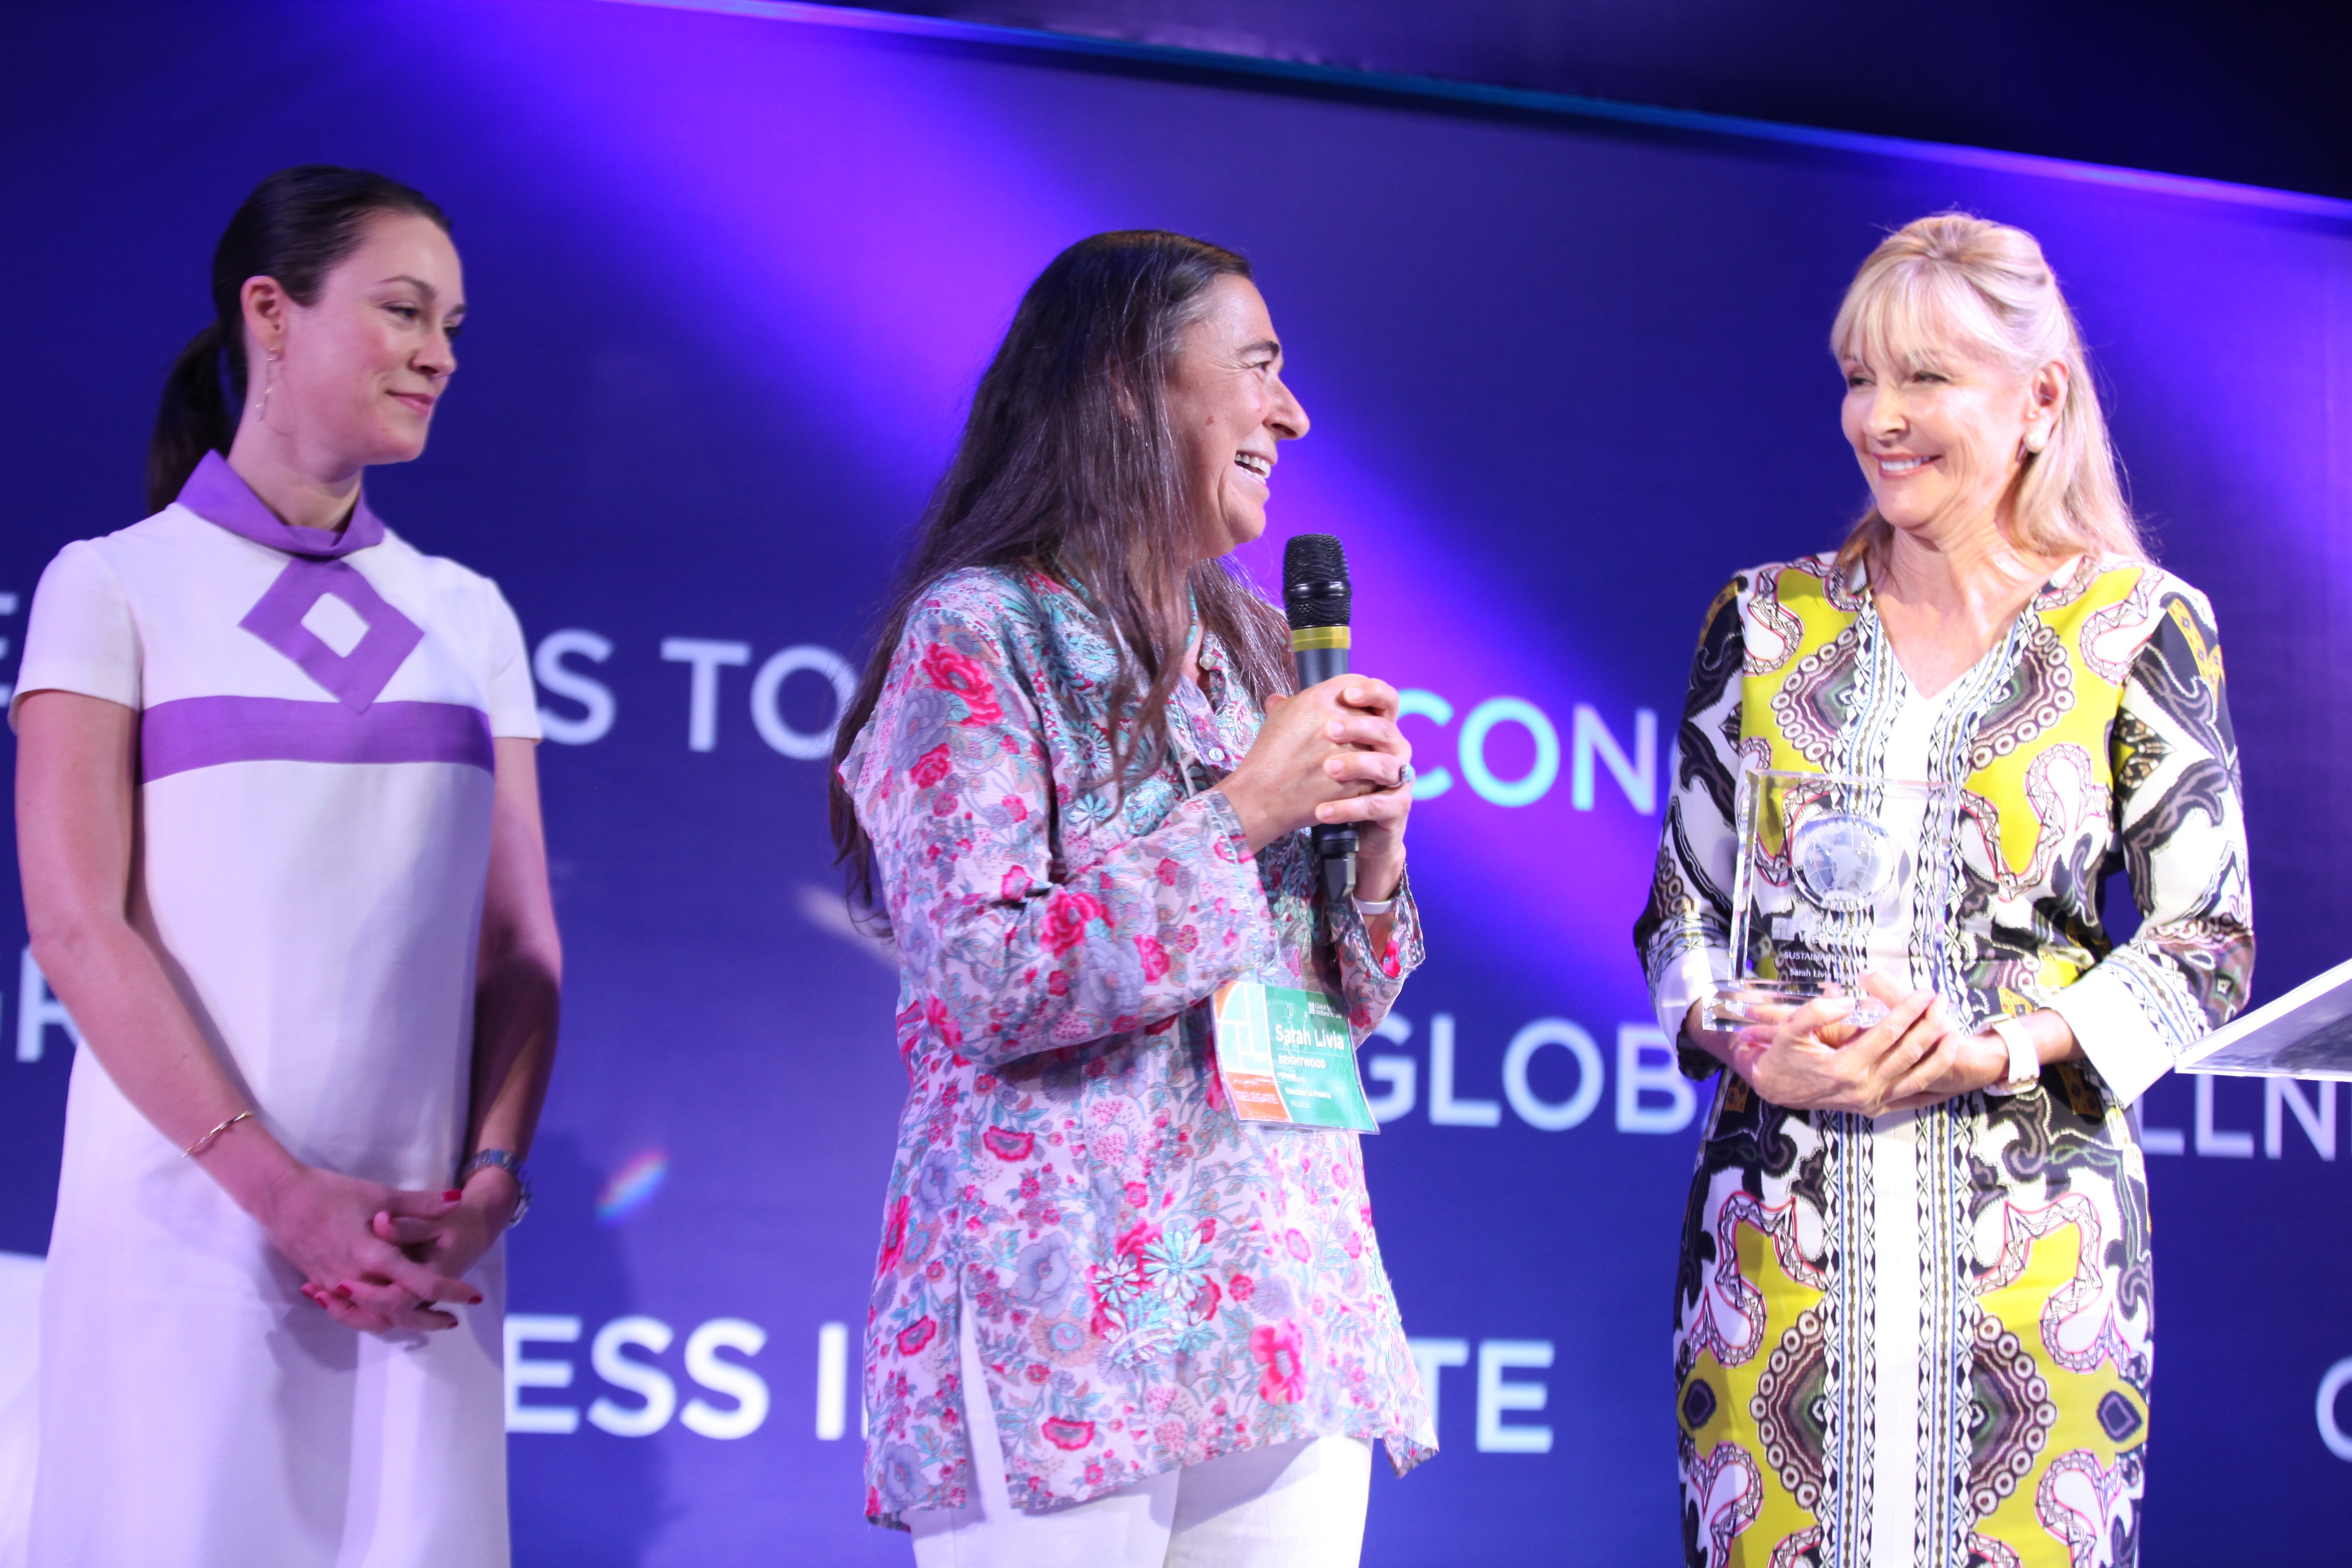 Sarah Livia Brightwood, Rancho La Puerta, receives Leader in Sustainability at Global Wellness Awards